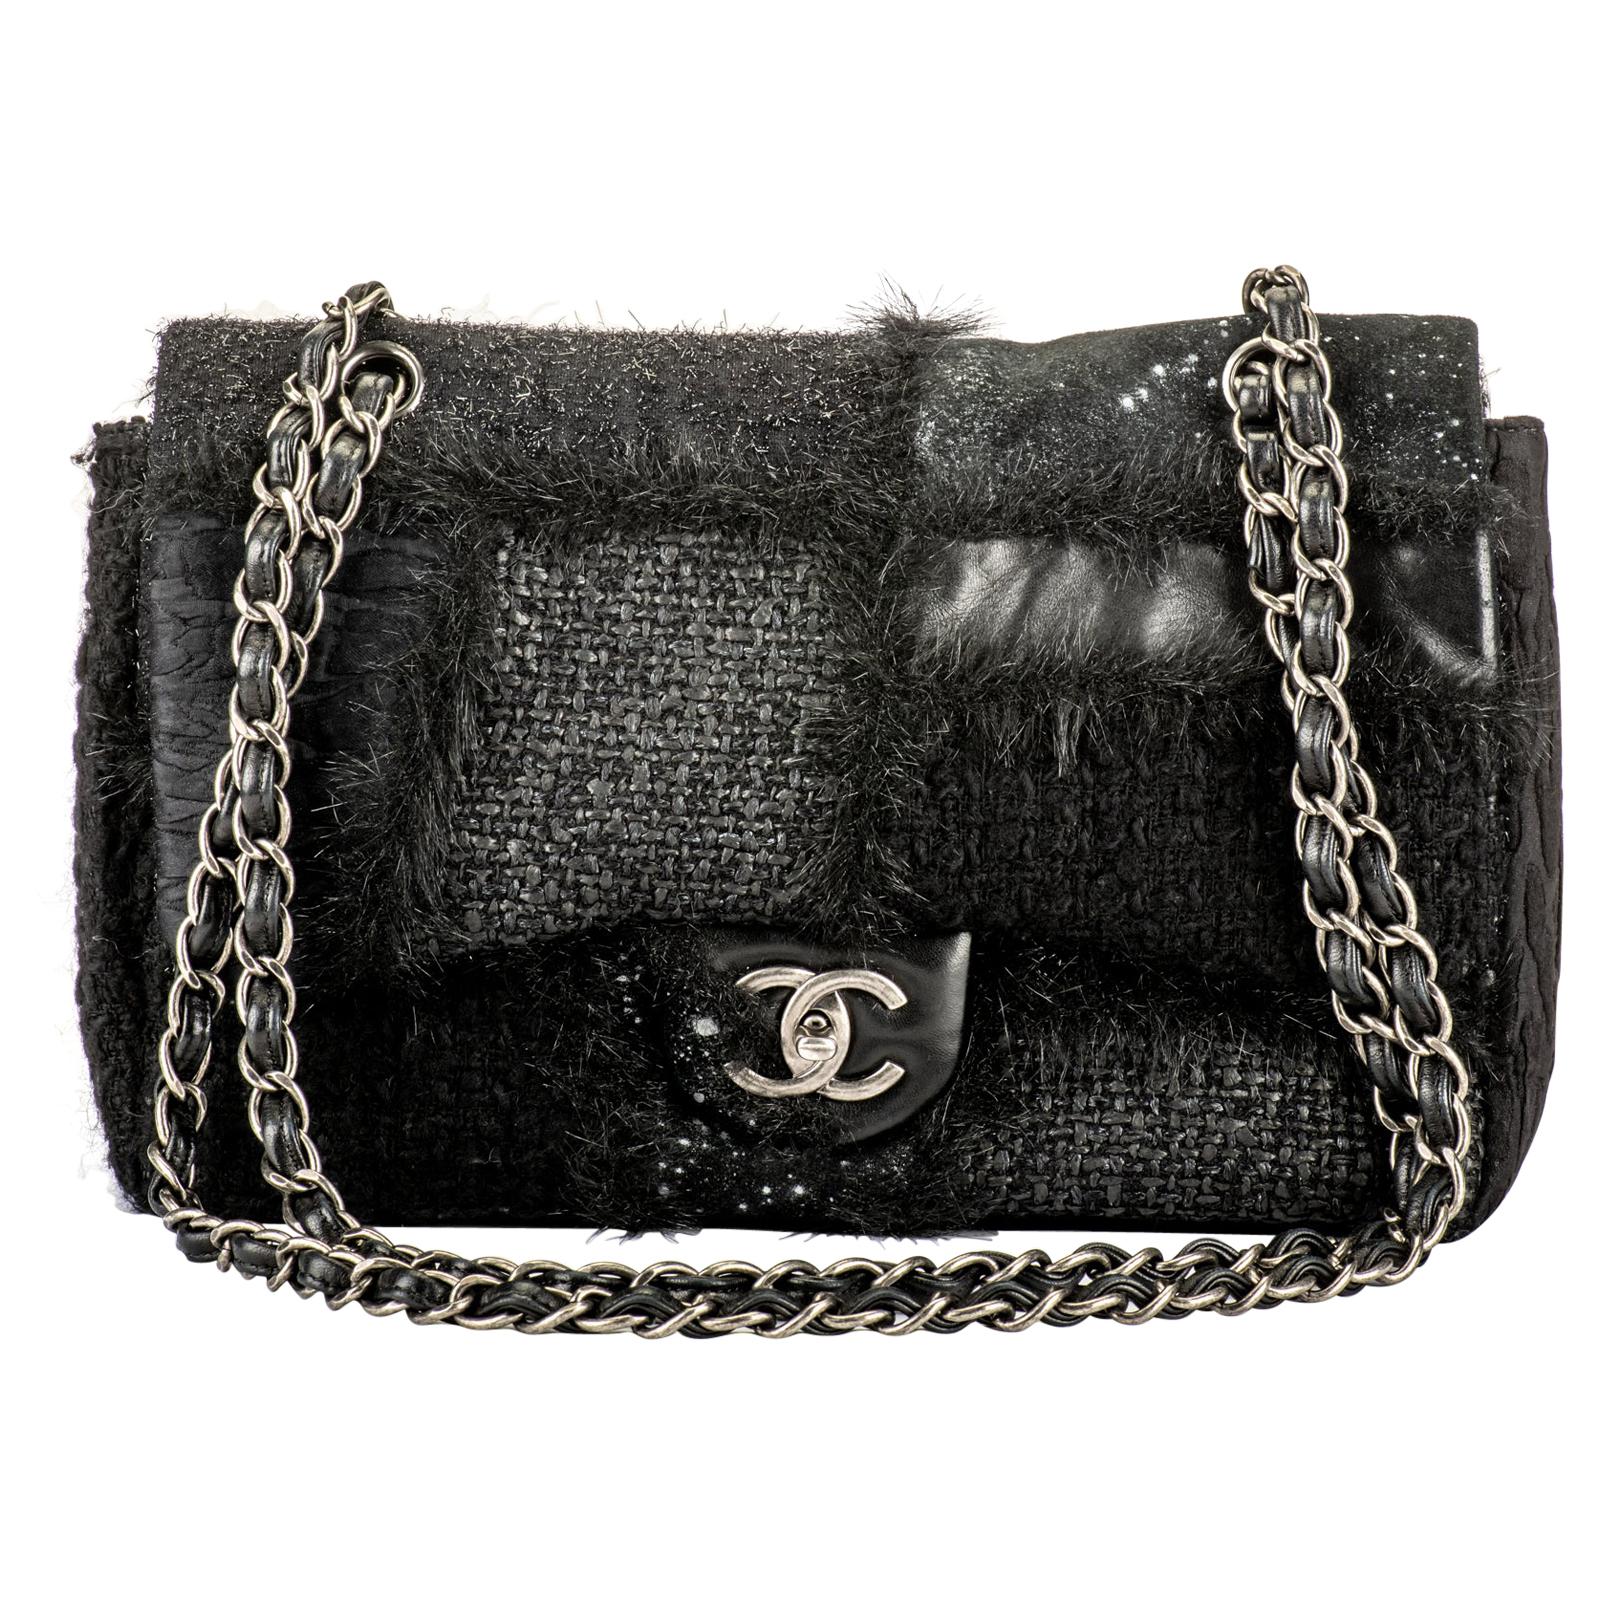 Chanel Limited Edition Black Patchwork Jumbo Bag